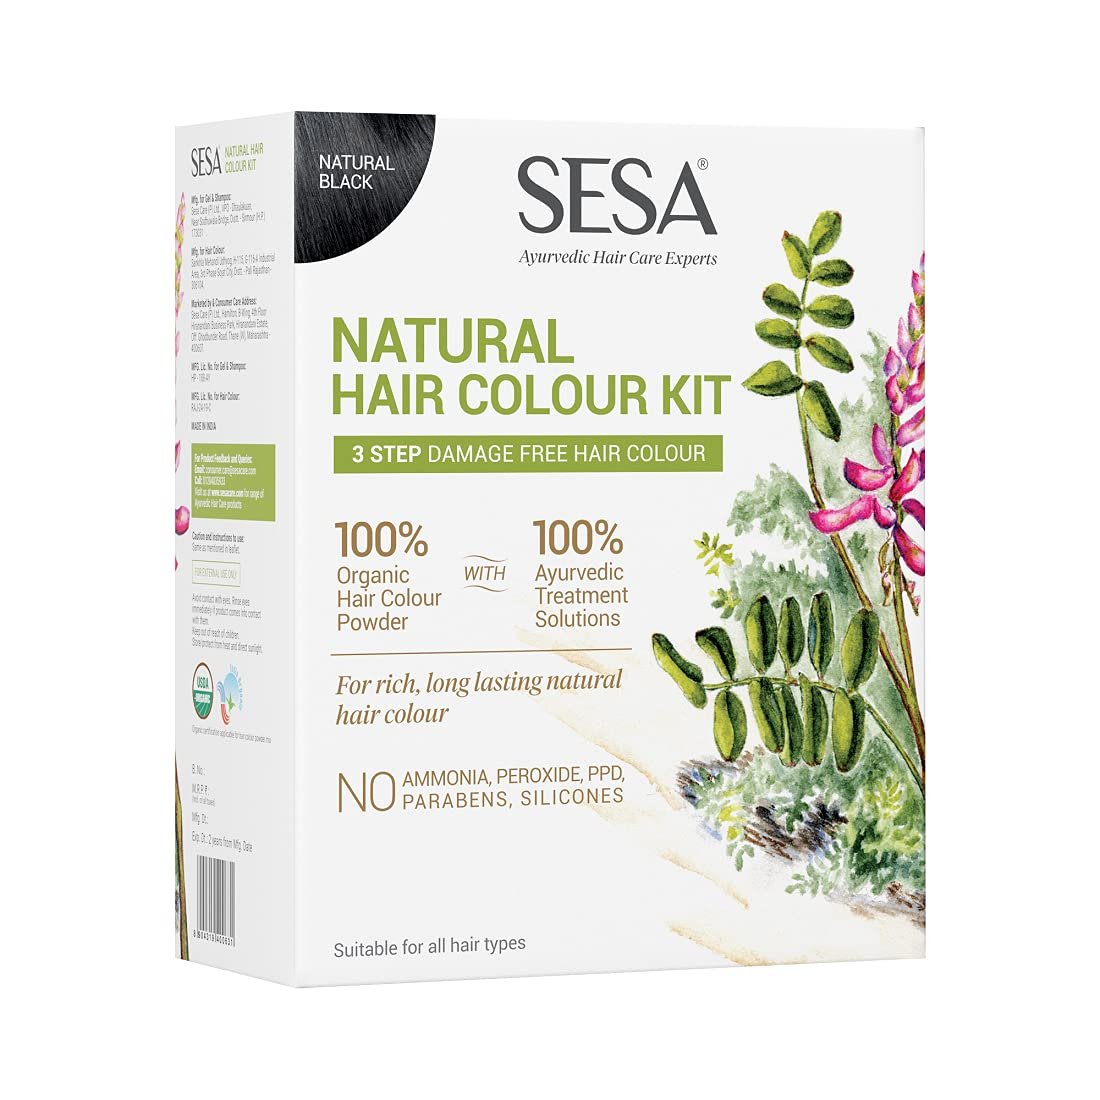 Natural Hair Colour Kit Review